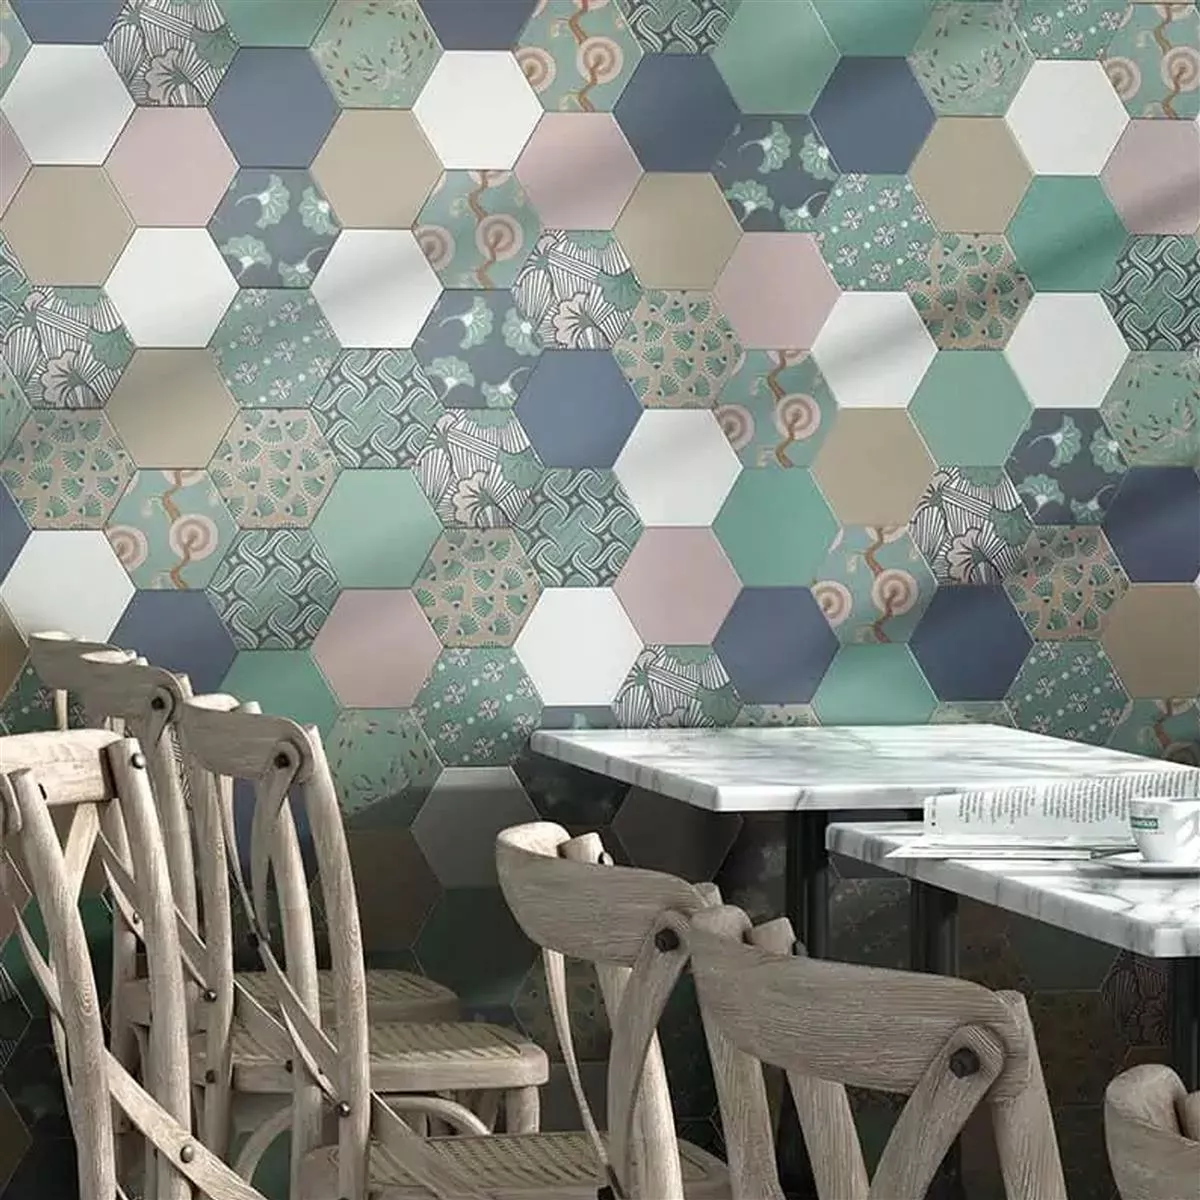 Prøve Porcellanato Fliser Modena Hexagon Uni Hvid Hexagon